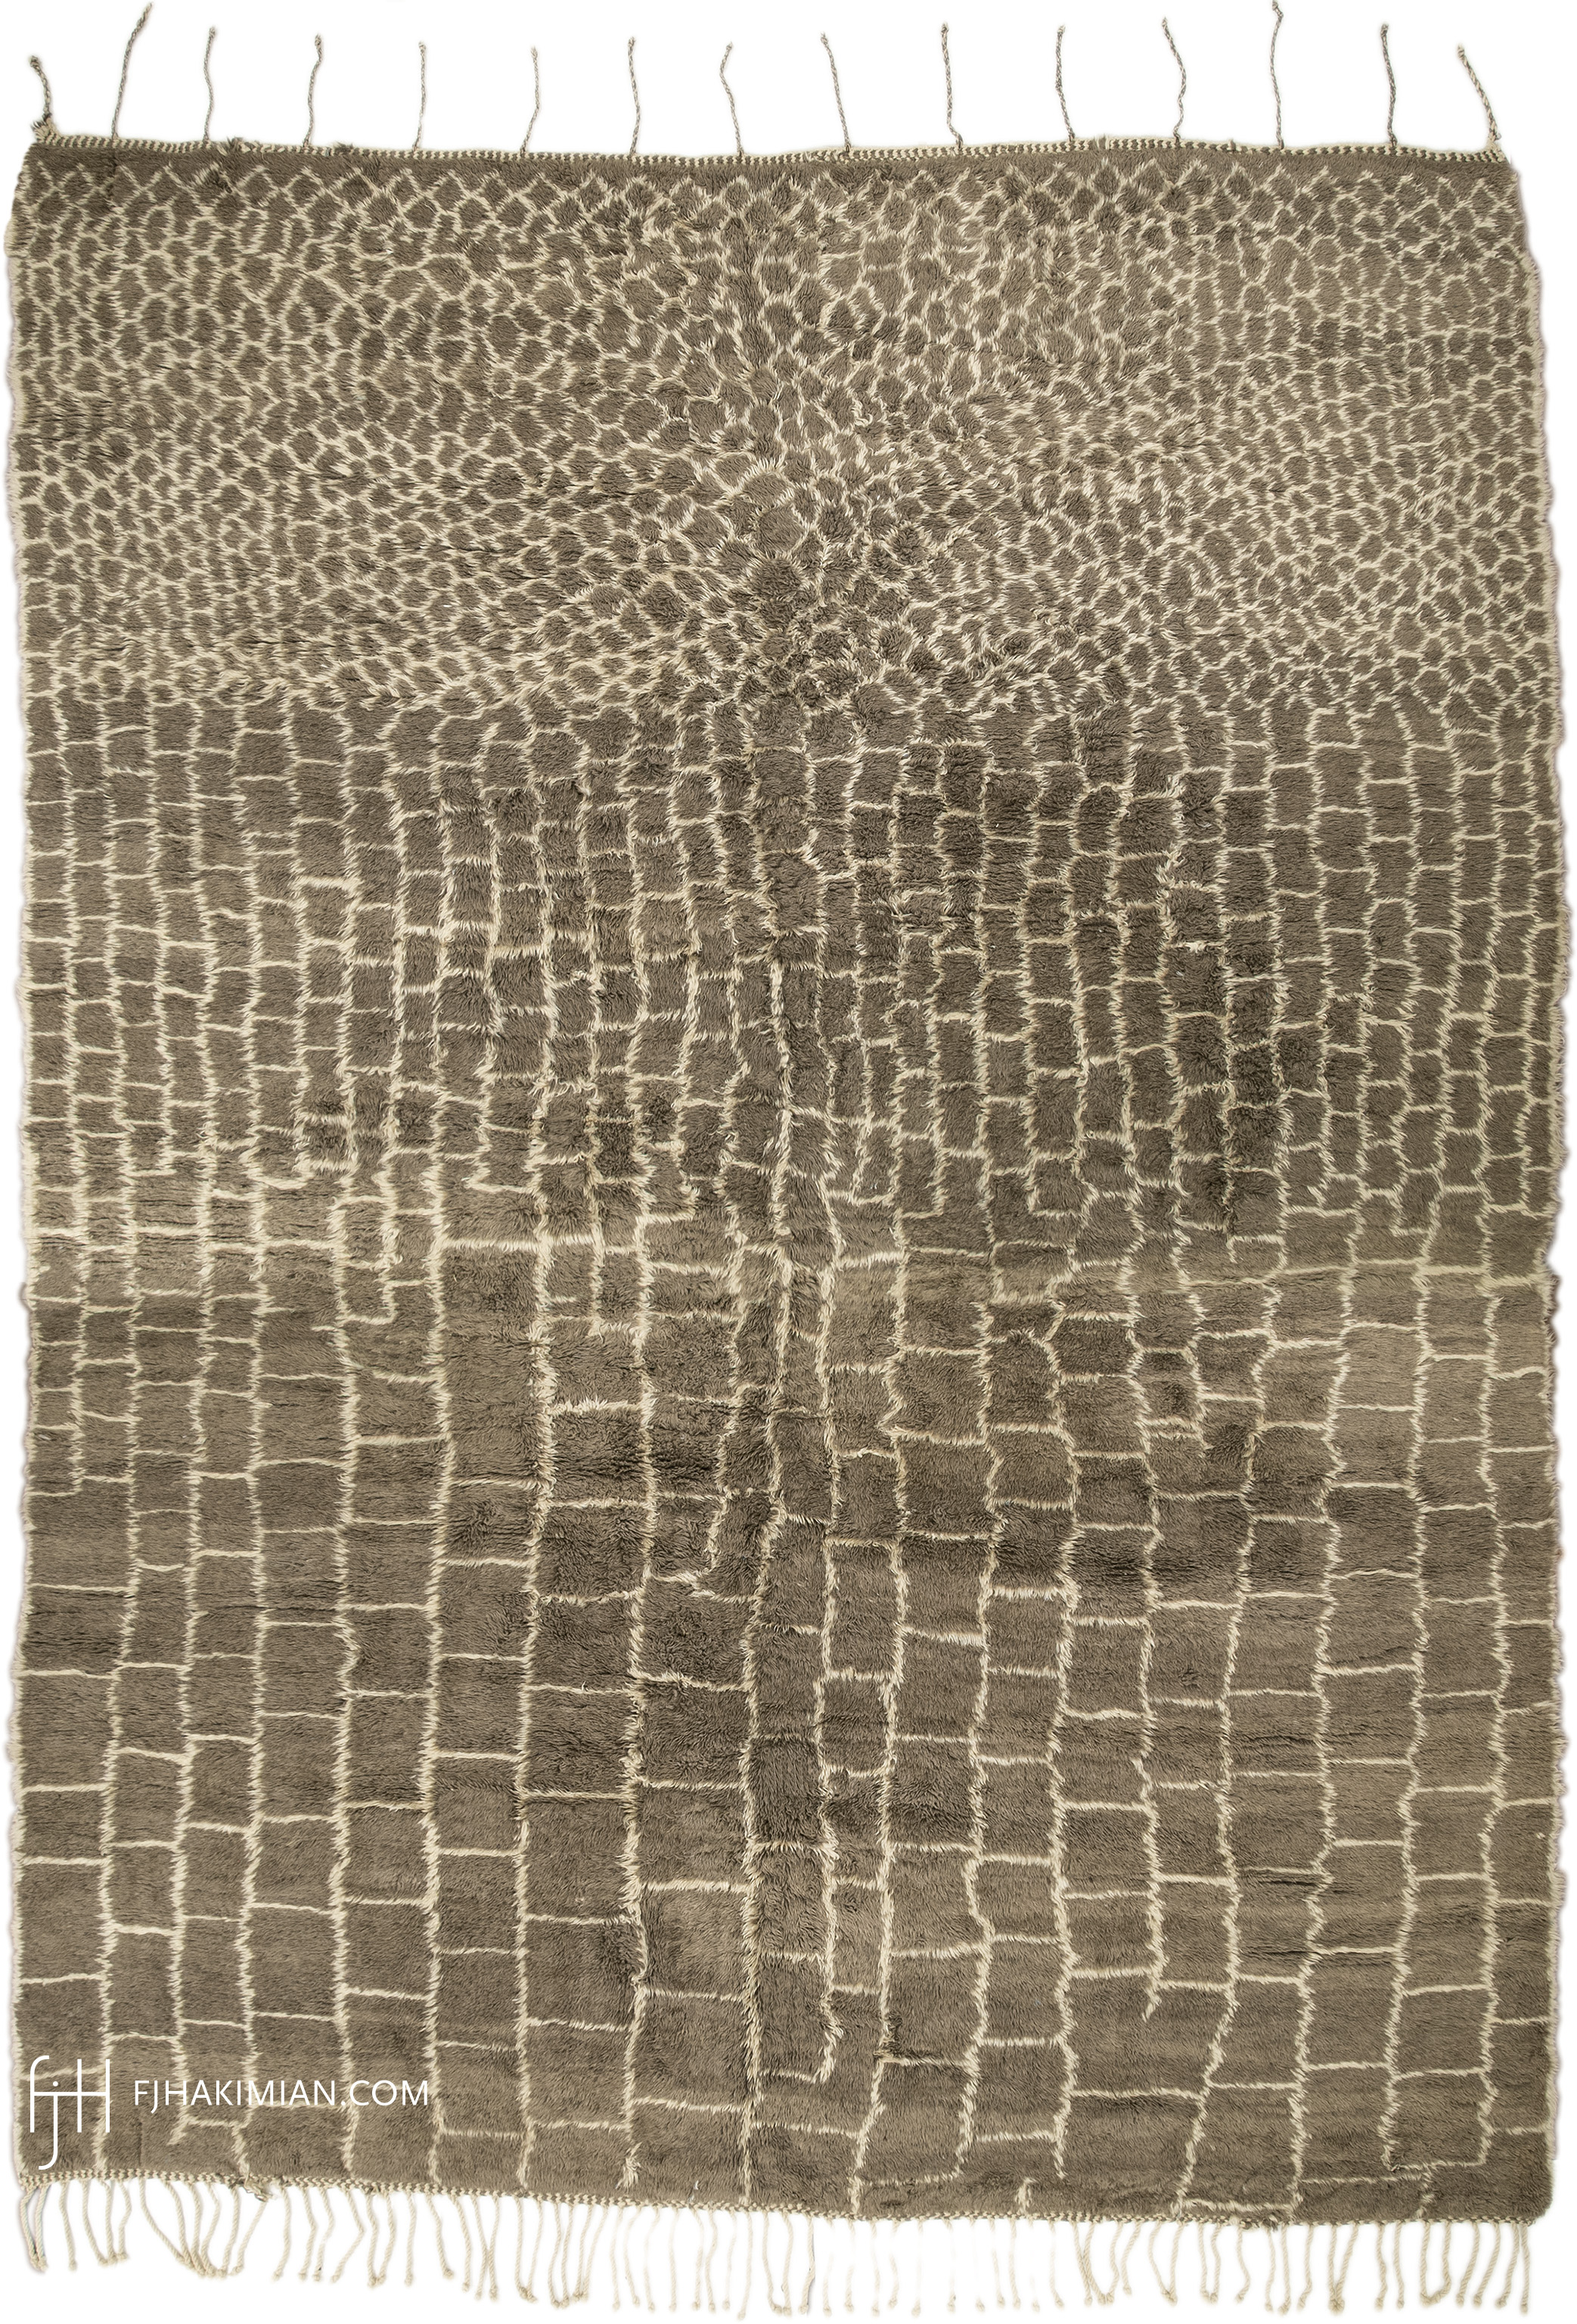 Beni Ourain Design | Custom Moroccan Carpet | Ref #15194 | Berber Carpet | FJ Hakimian | Carpet Gallery in NY